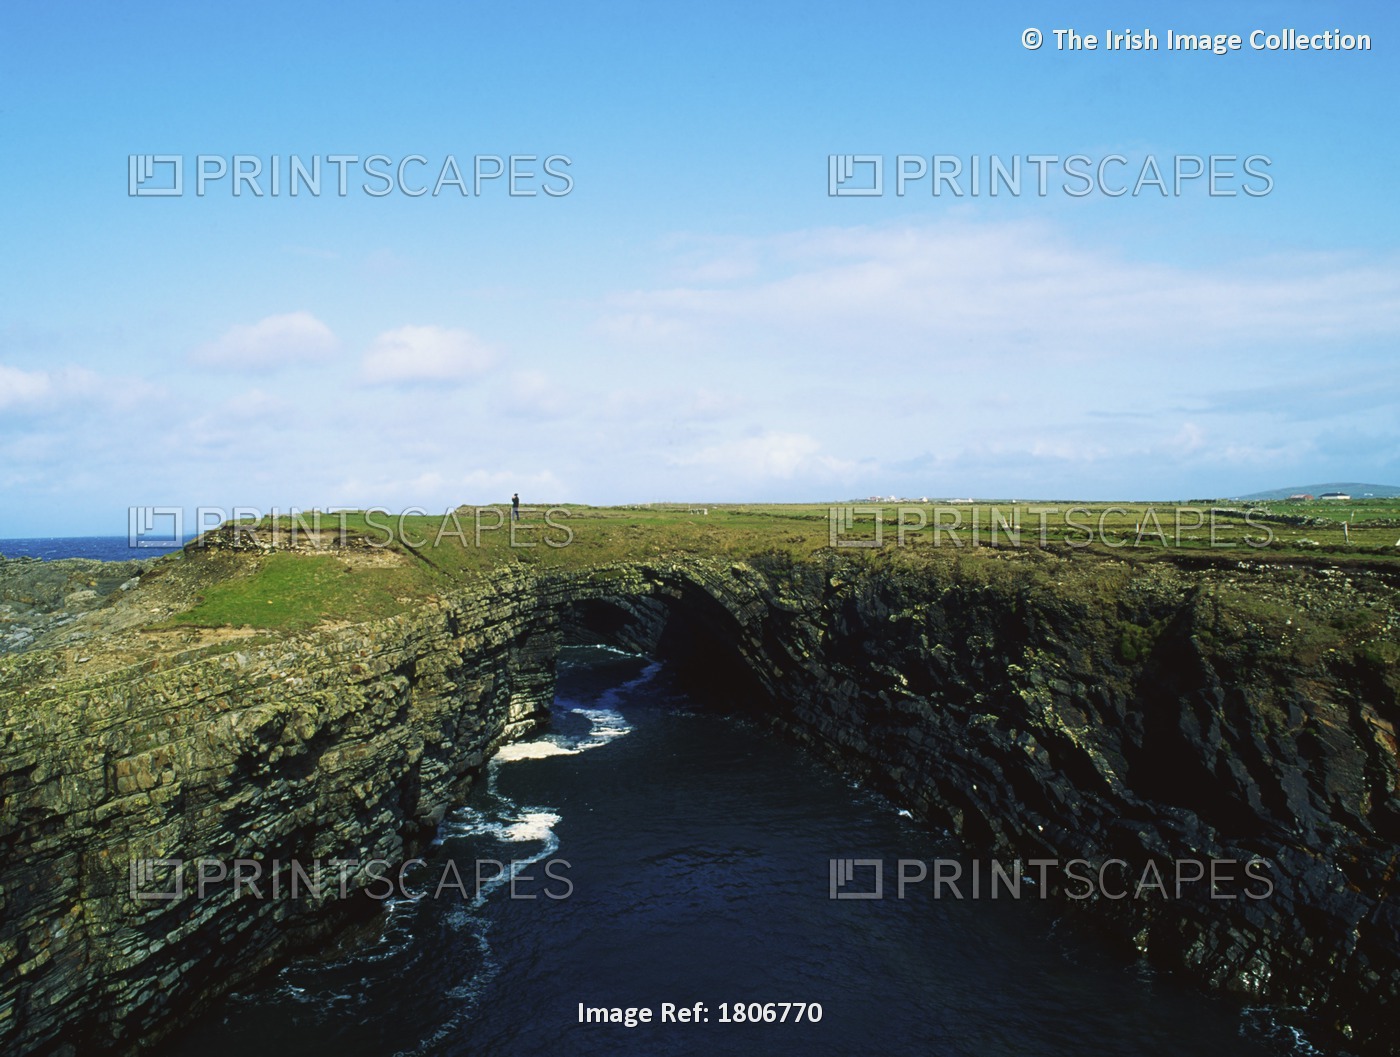 Bridges Of Ross, Co Clare, Ireland, Cliff Erosion On The Atlantic